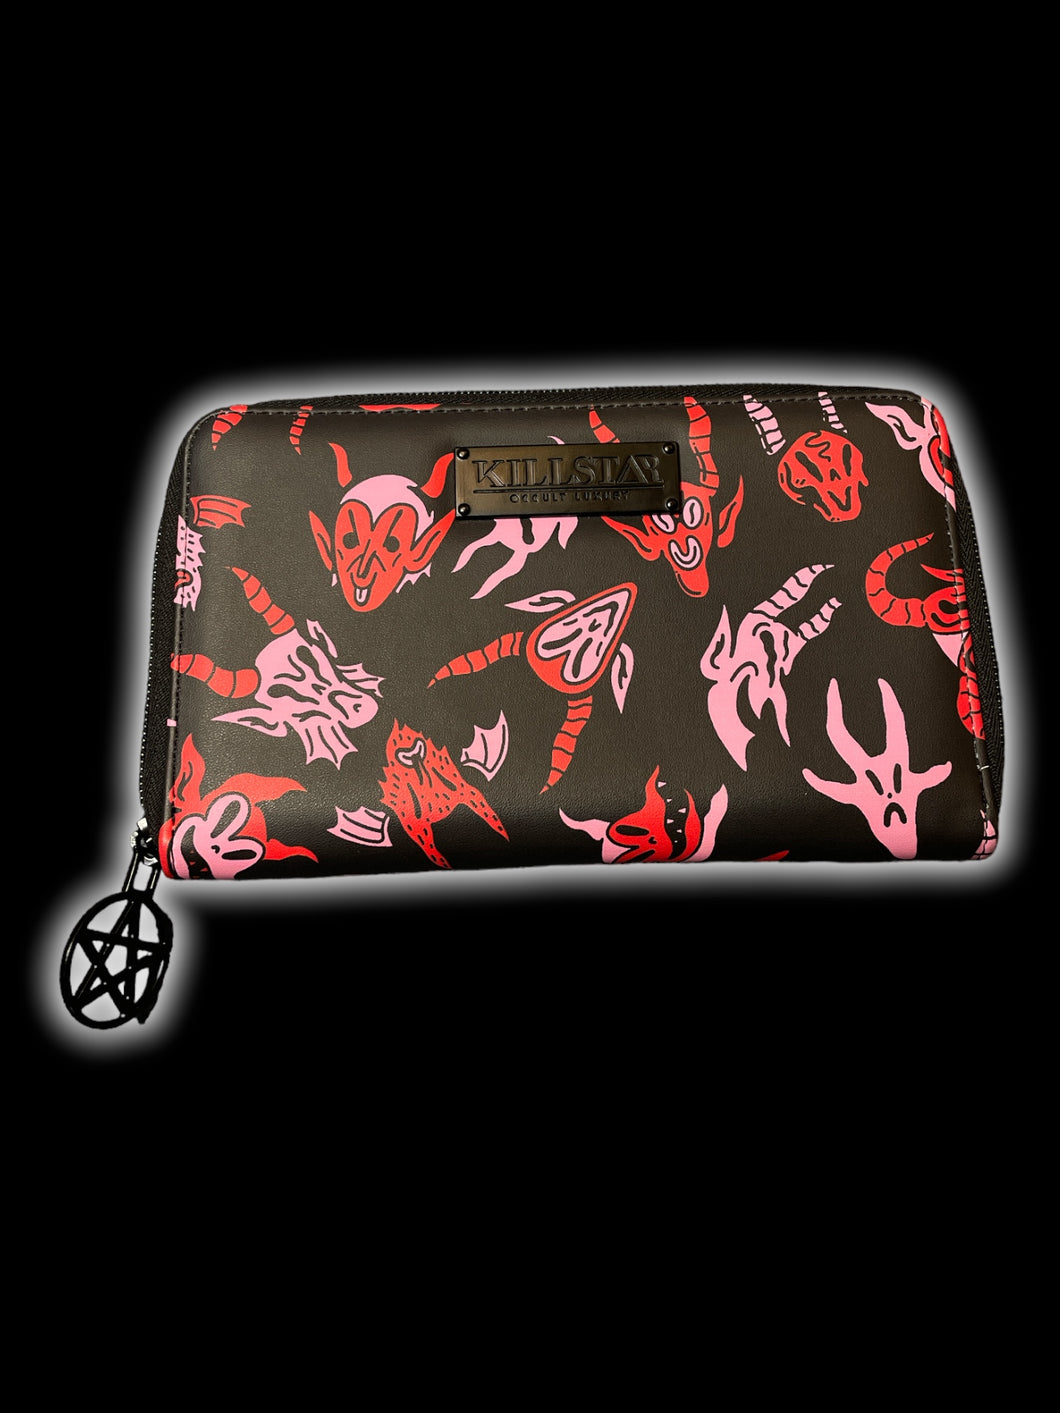 Black, red, & pink Killstar clutch wallet w/ demon graphic, & pentacle zipper closure